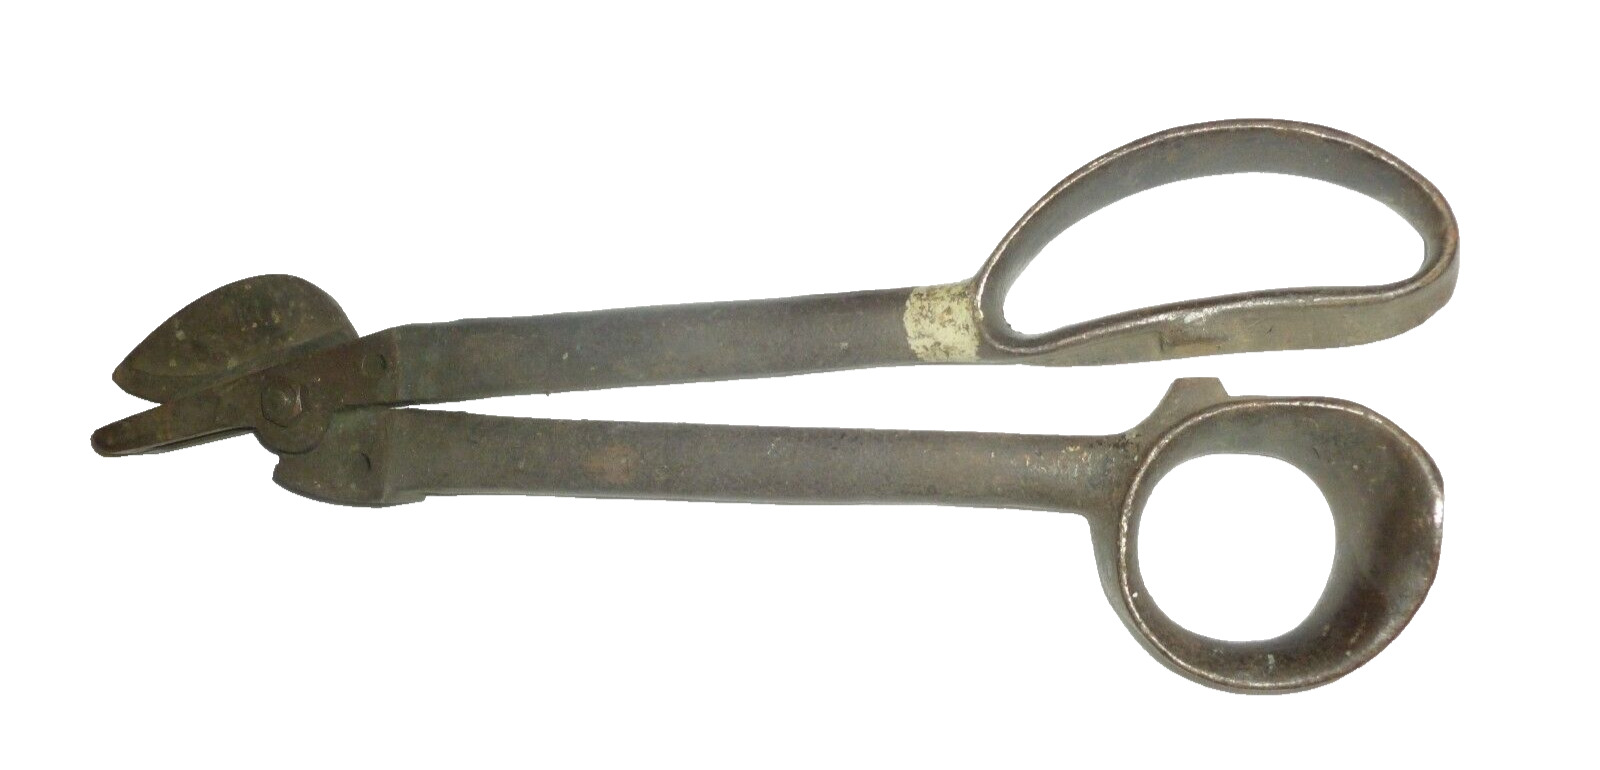 Antique Pexto 13” Nipper Special Sheet Steel Cutter Snips Shears Rare A2